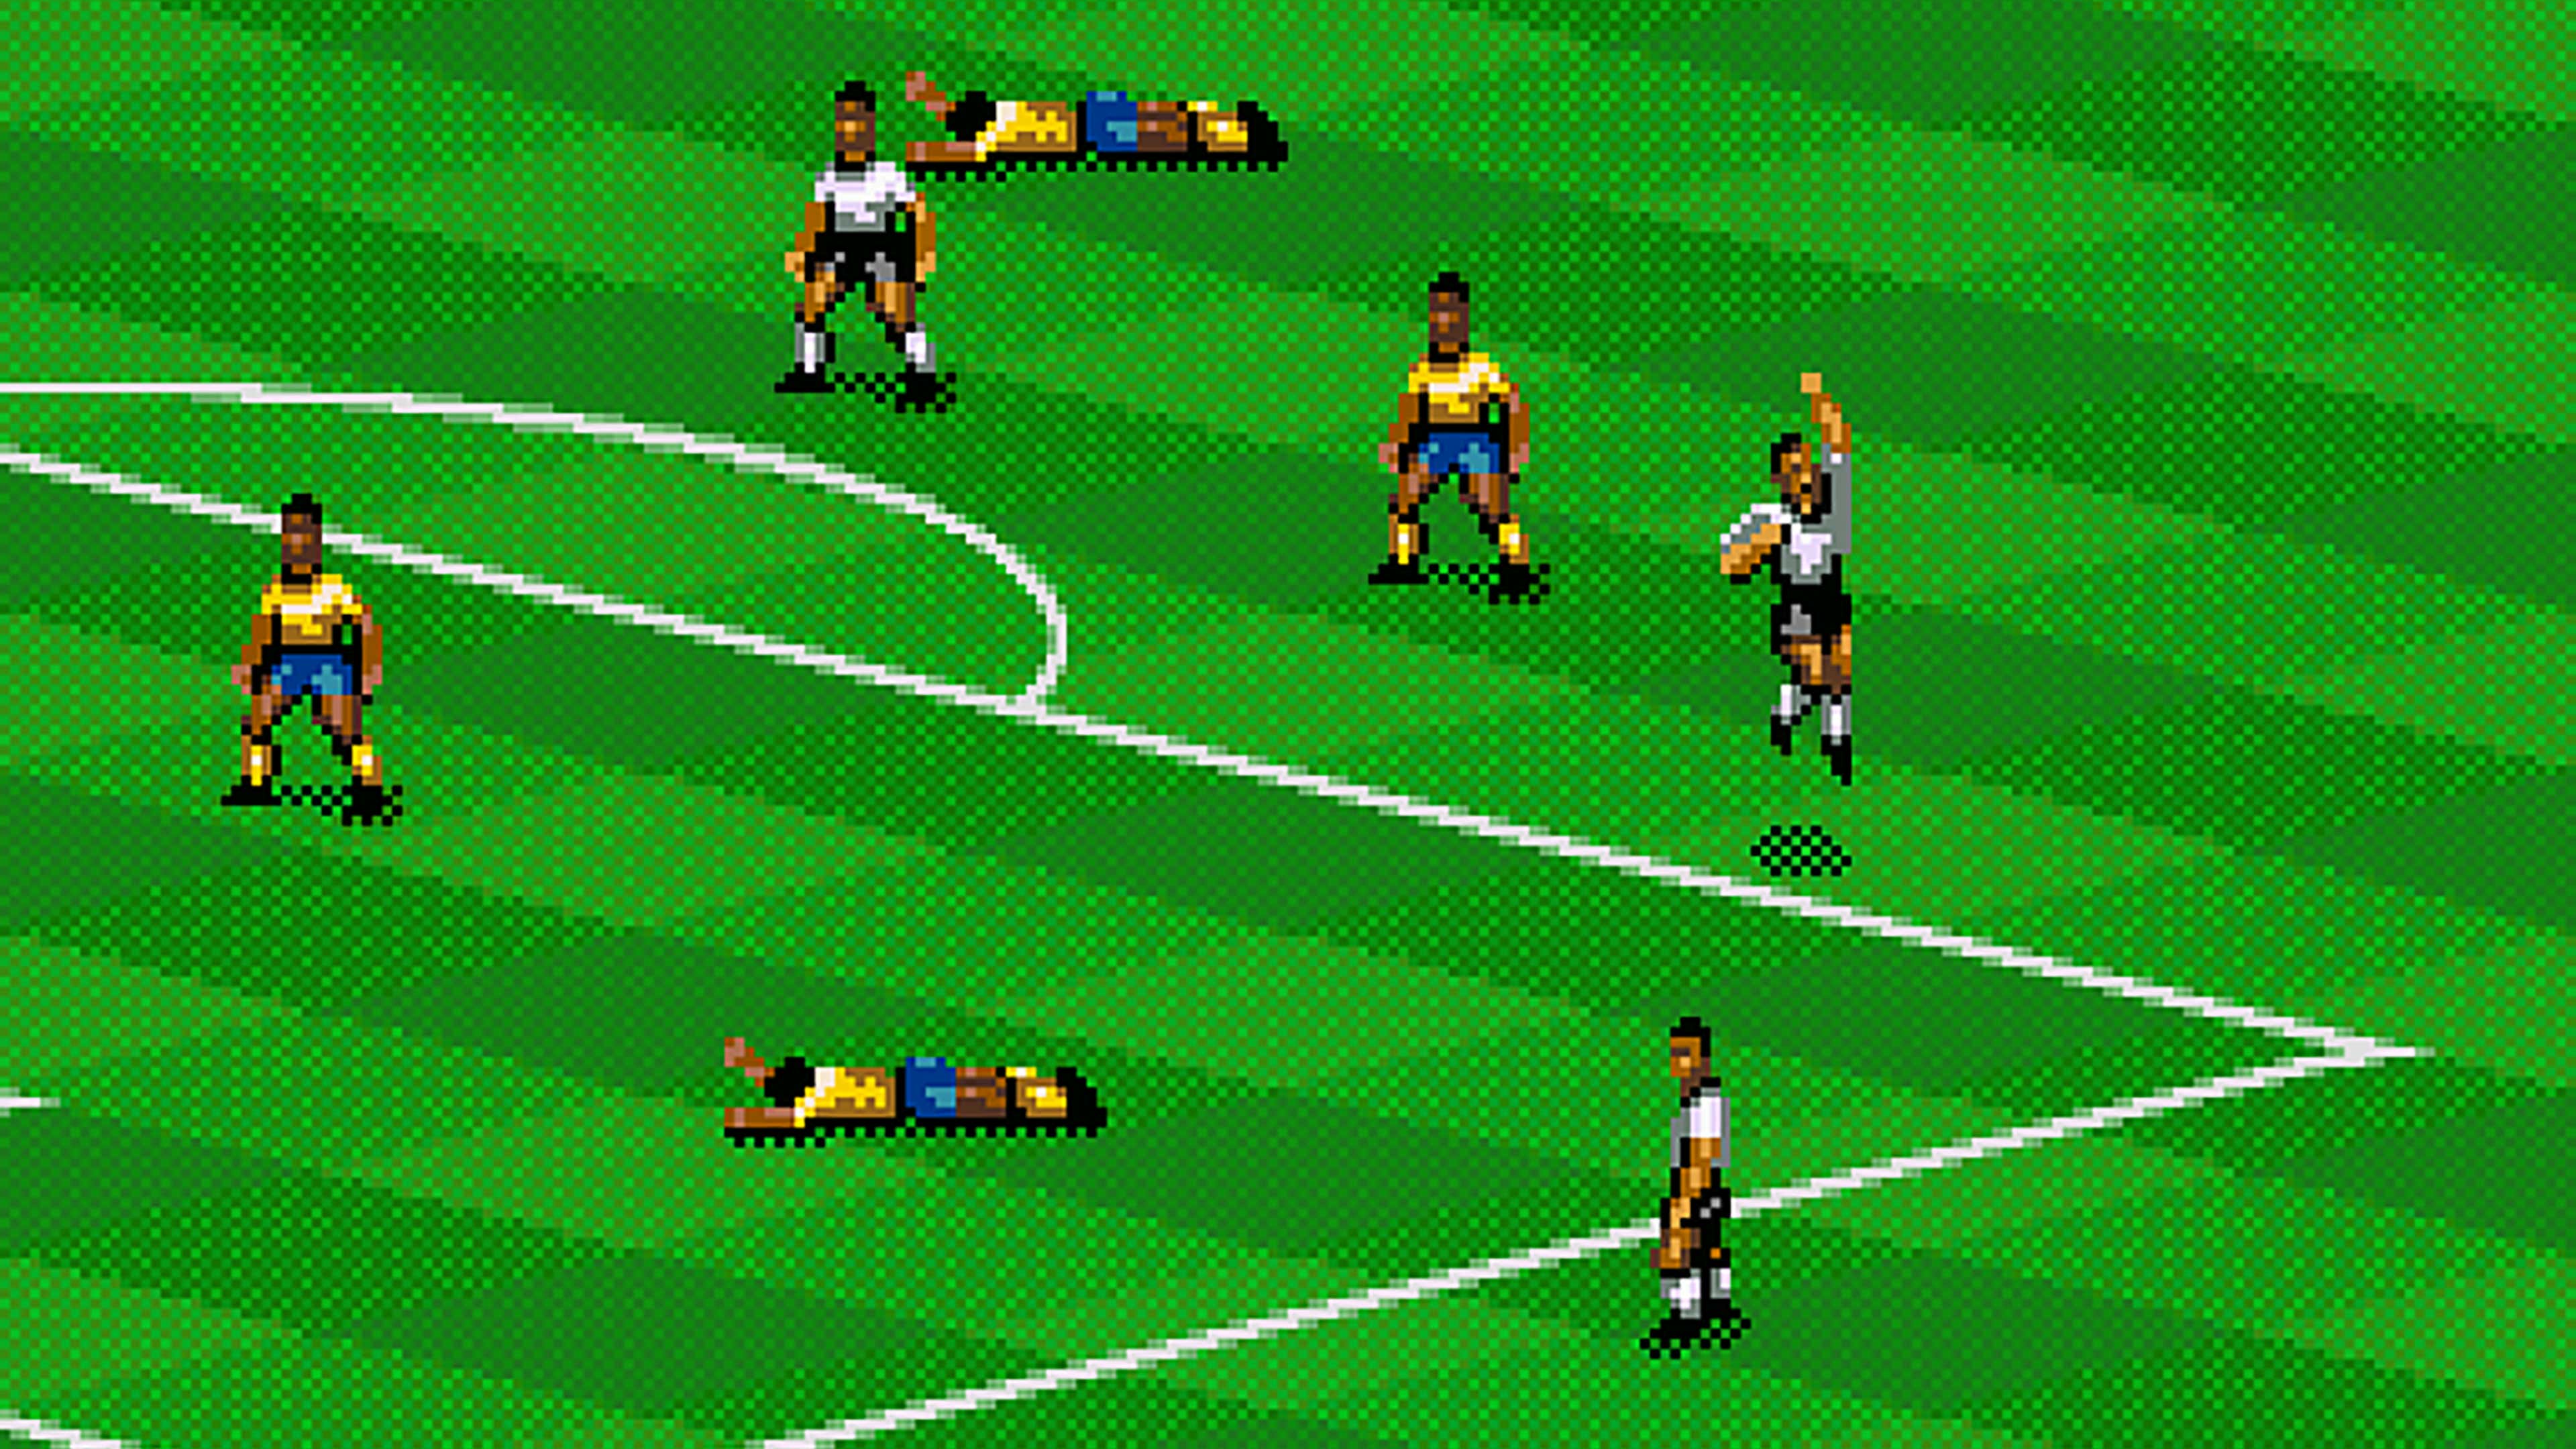 FIFA Soccer 97 (Game) - Giant Bomb